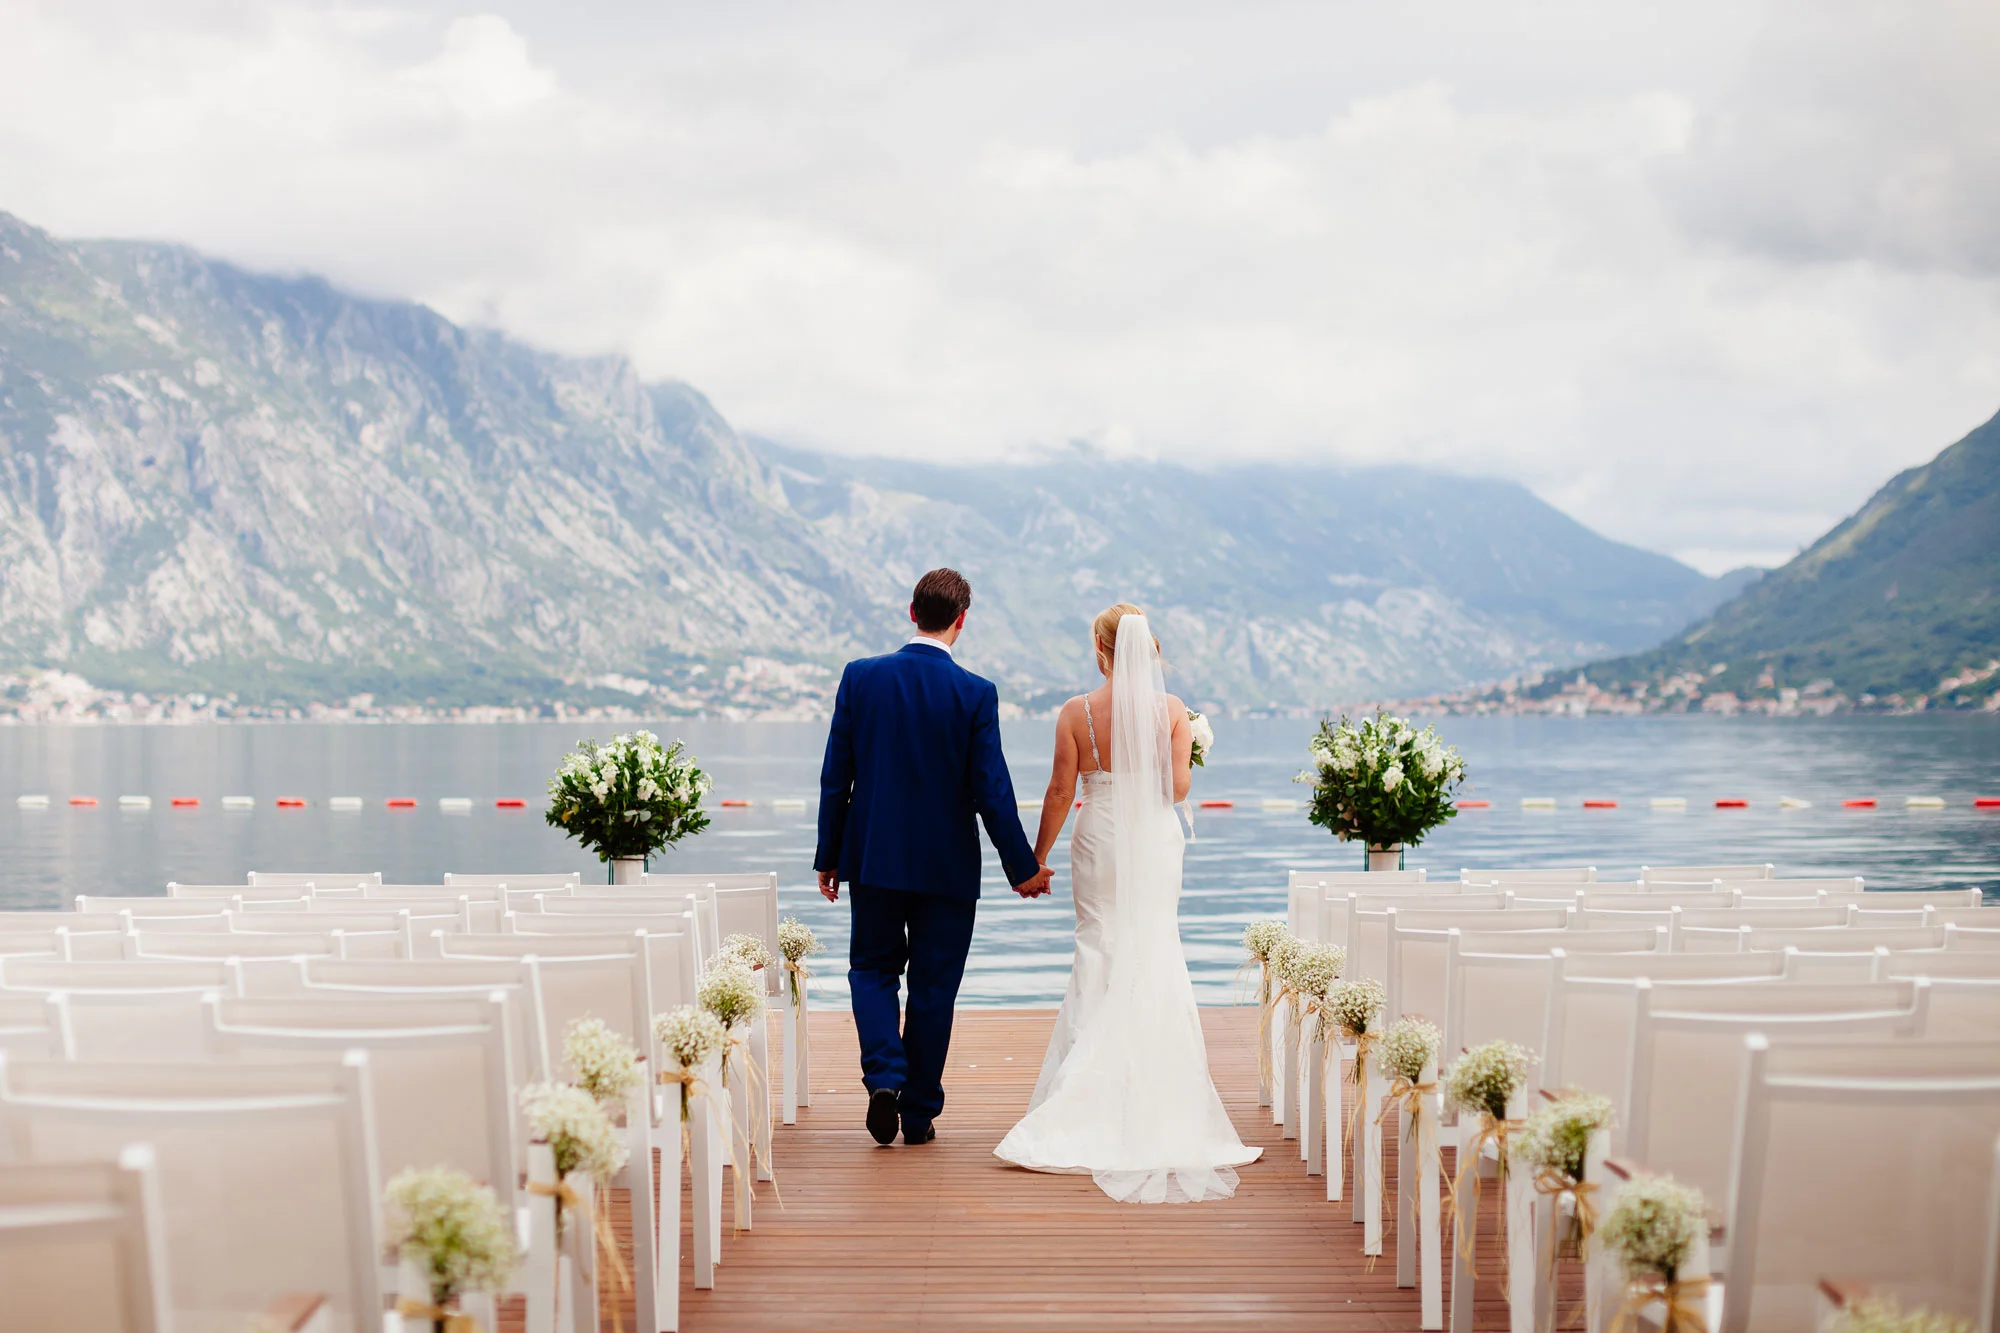 Travel Expert Shares Tips for Planning a Destination Wedding